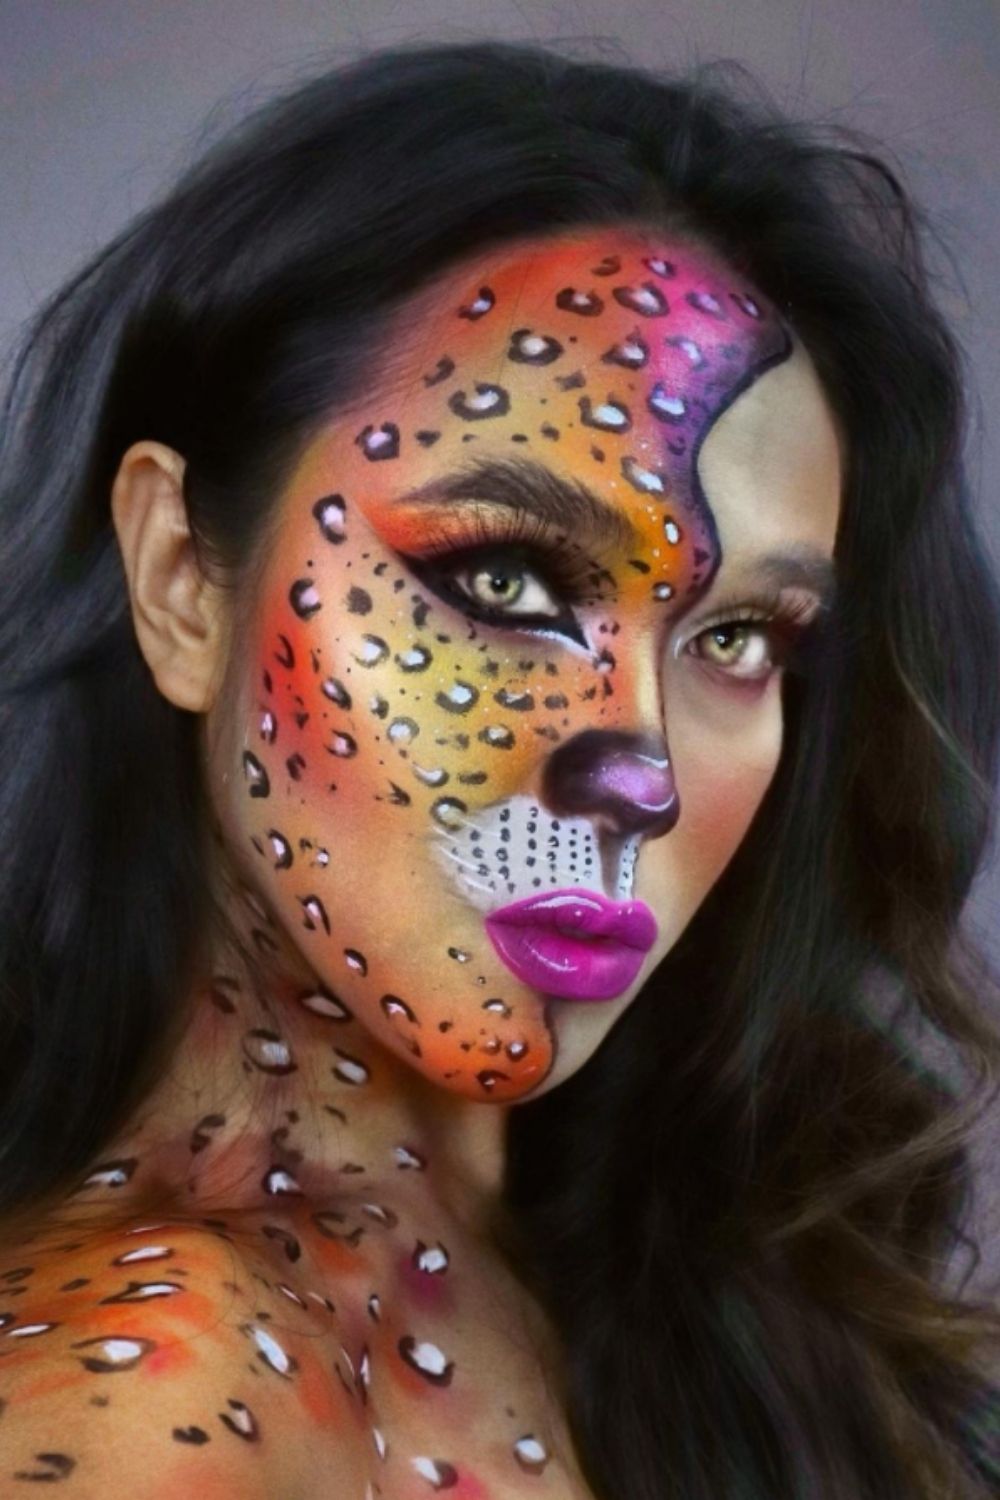 The cheetah makeup look